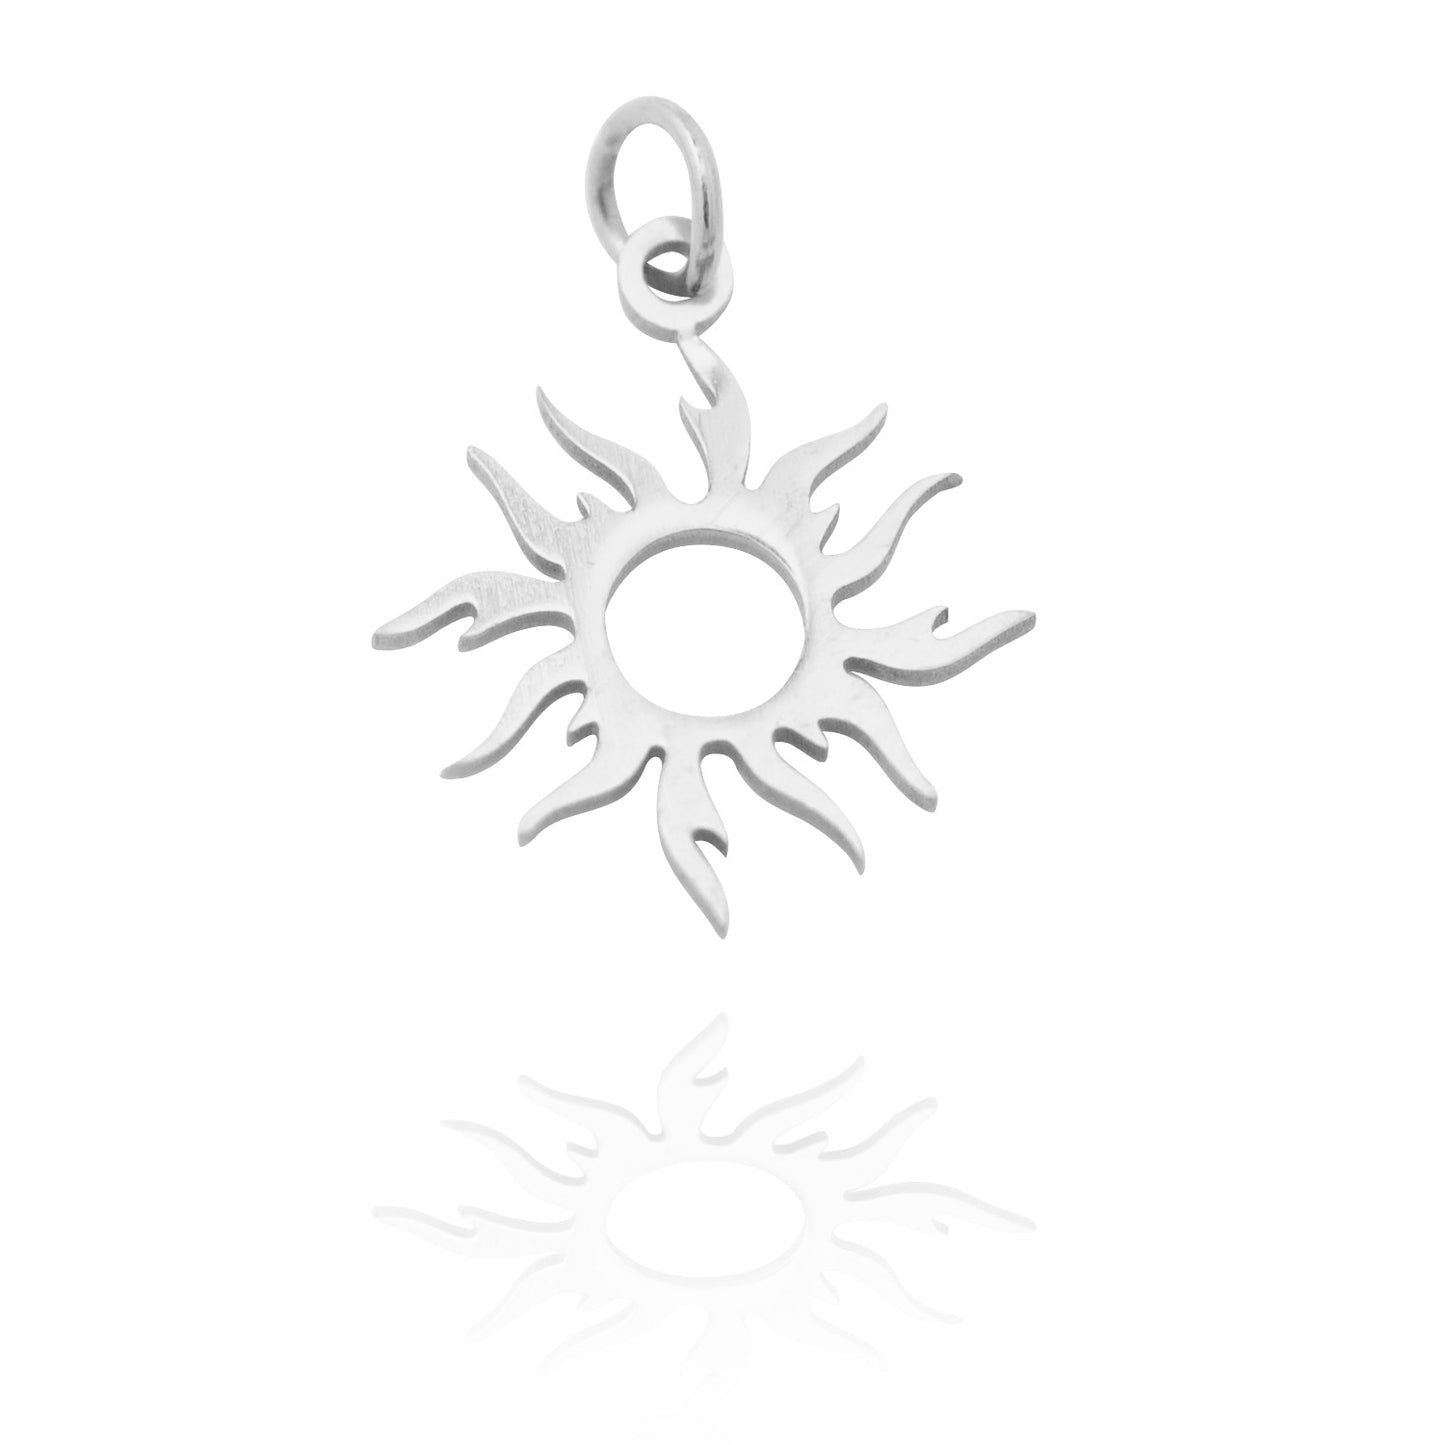 Stainless steel pendant / sun / 18 mm